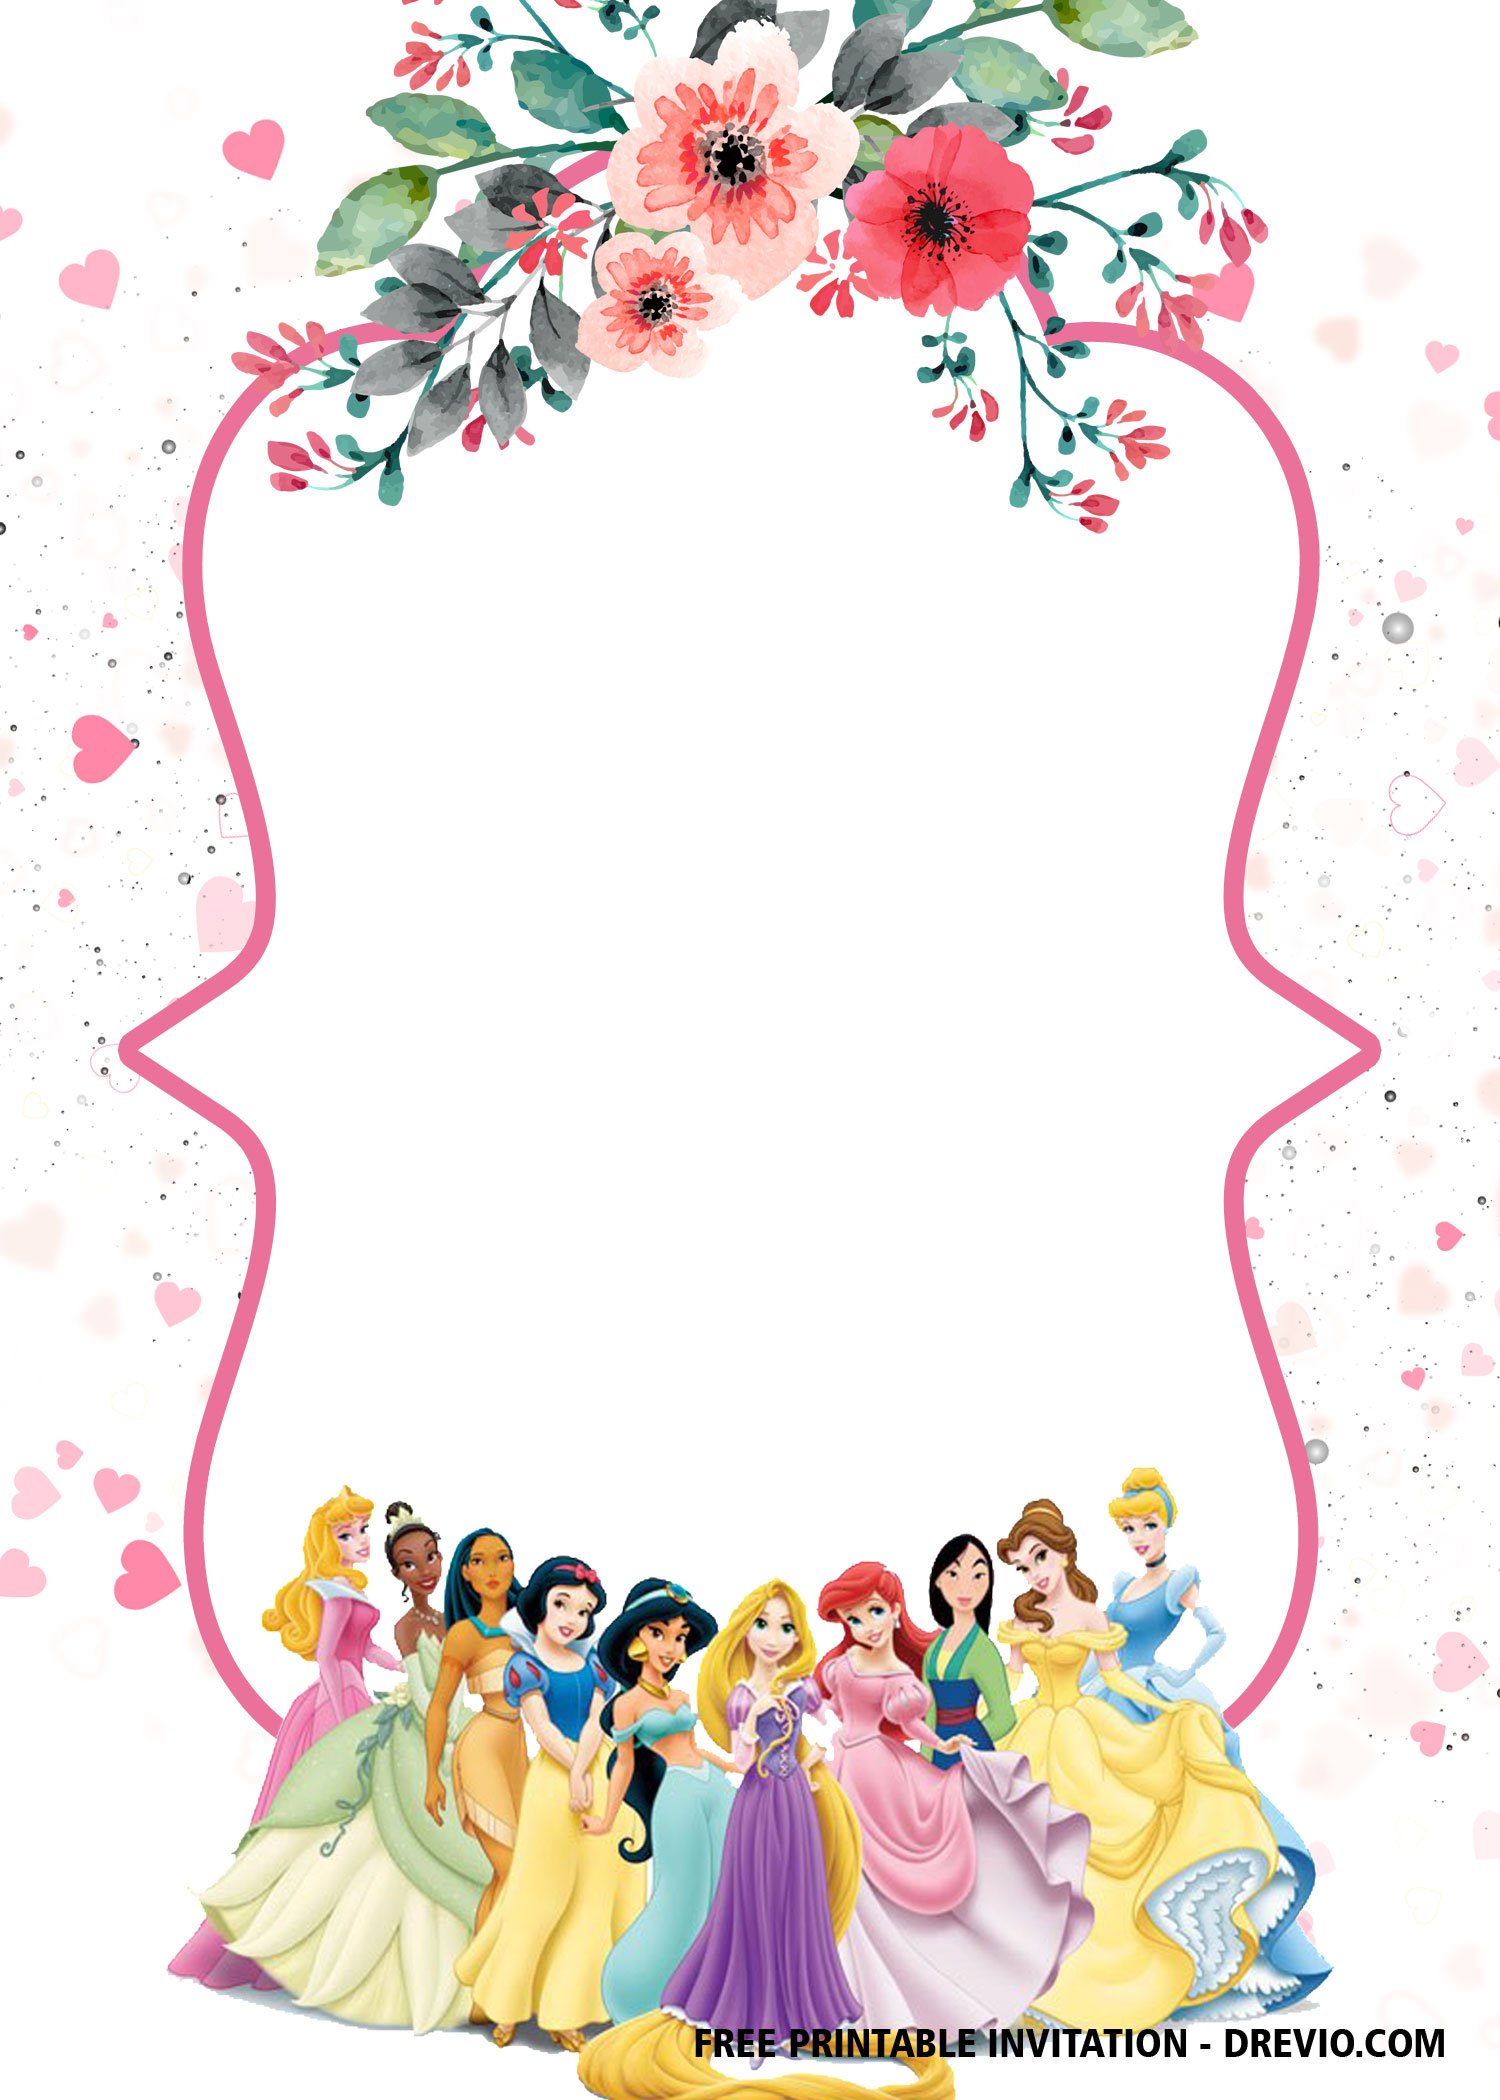 FREE Printable Disney Princesses Invitation Templates FREE Printable